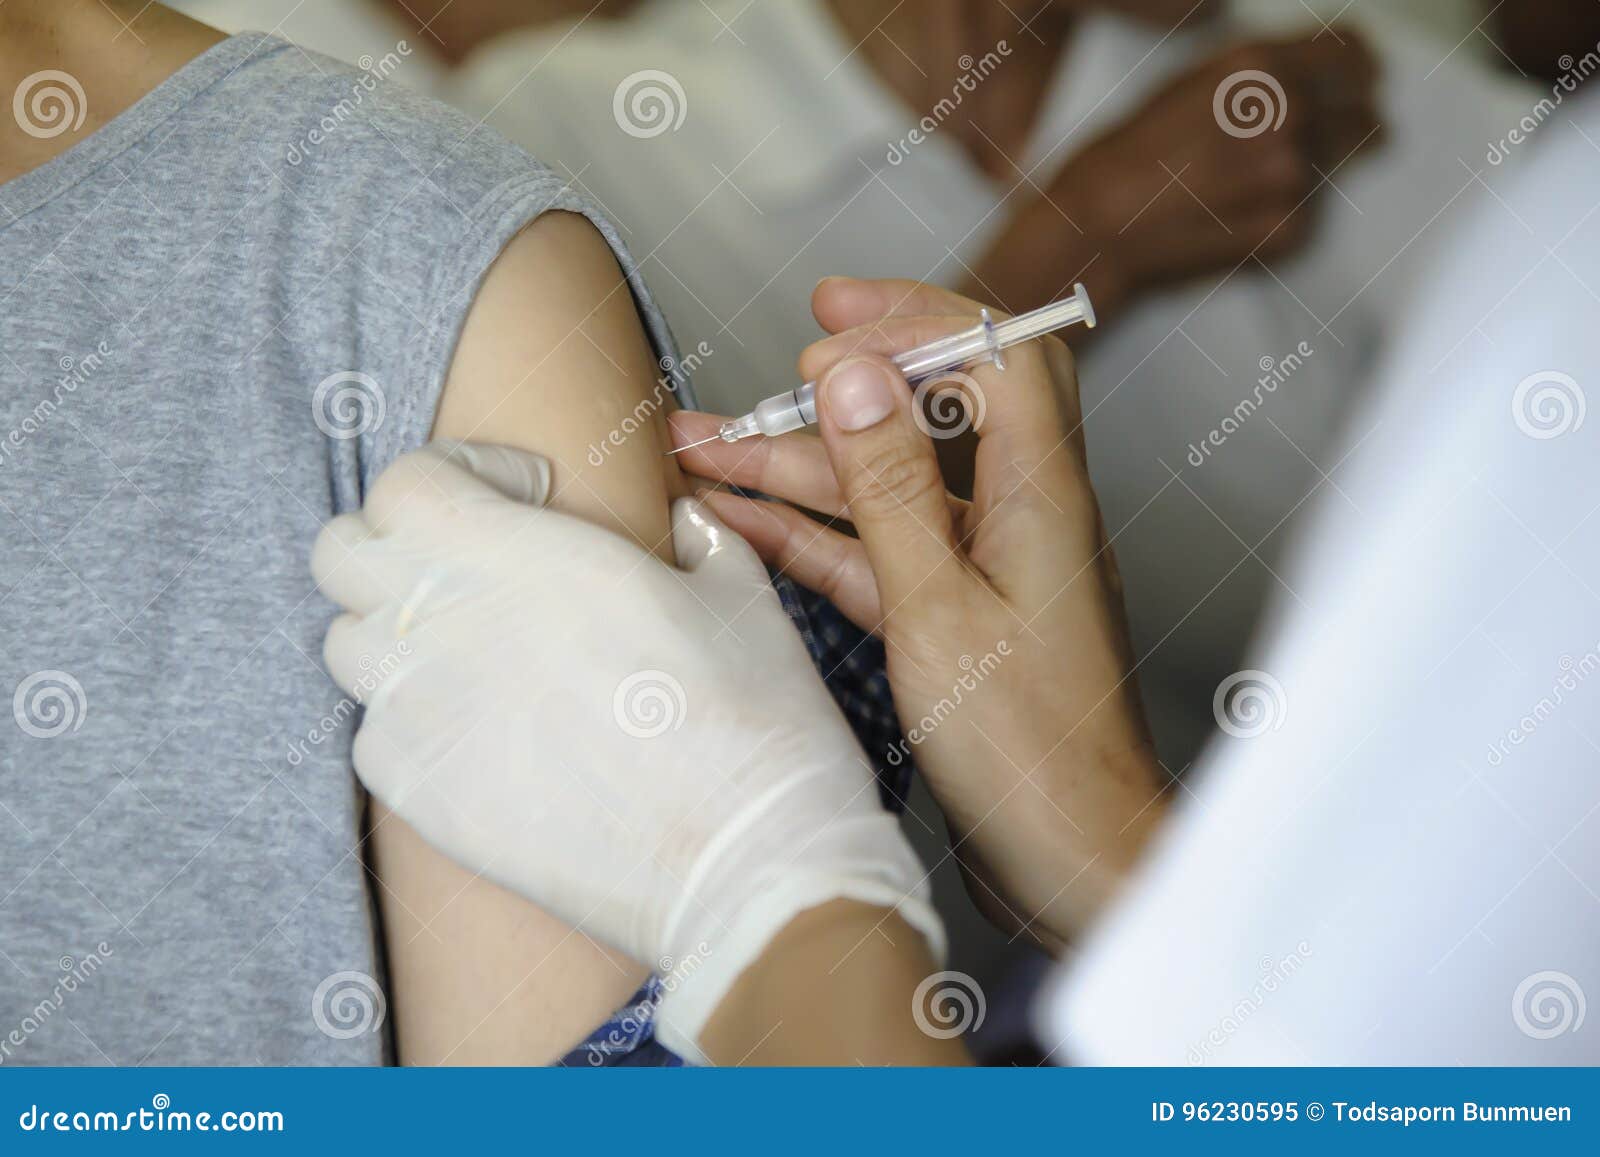 vaccination against influenza vaccine health